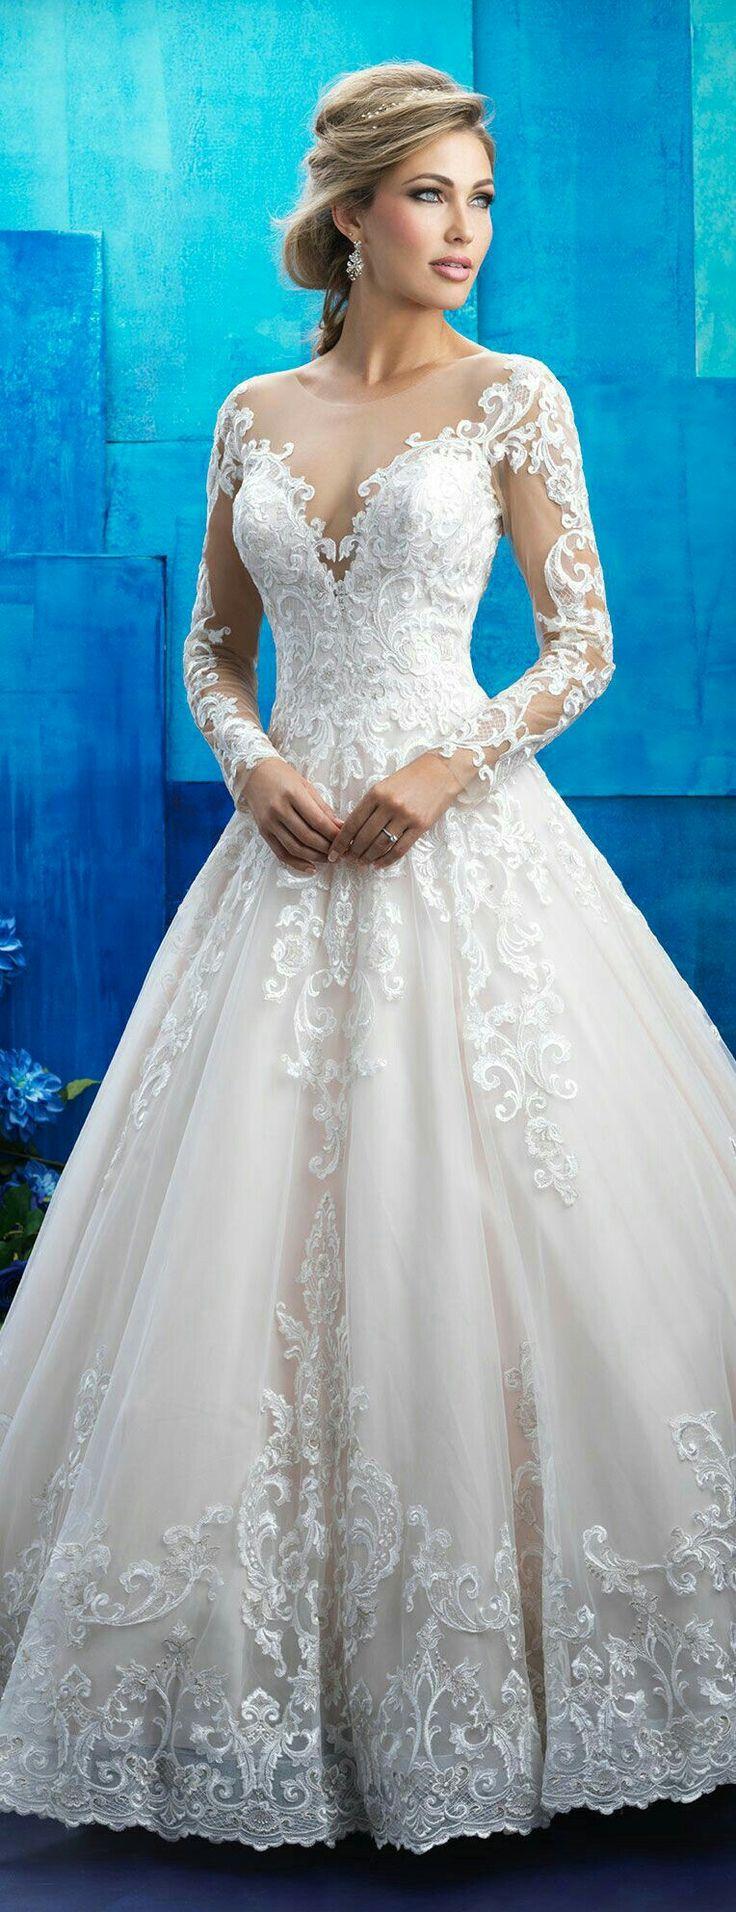 Wedding - Wedding Dress Shopping Tips